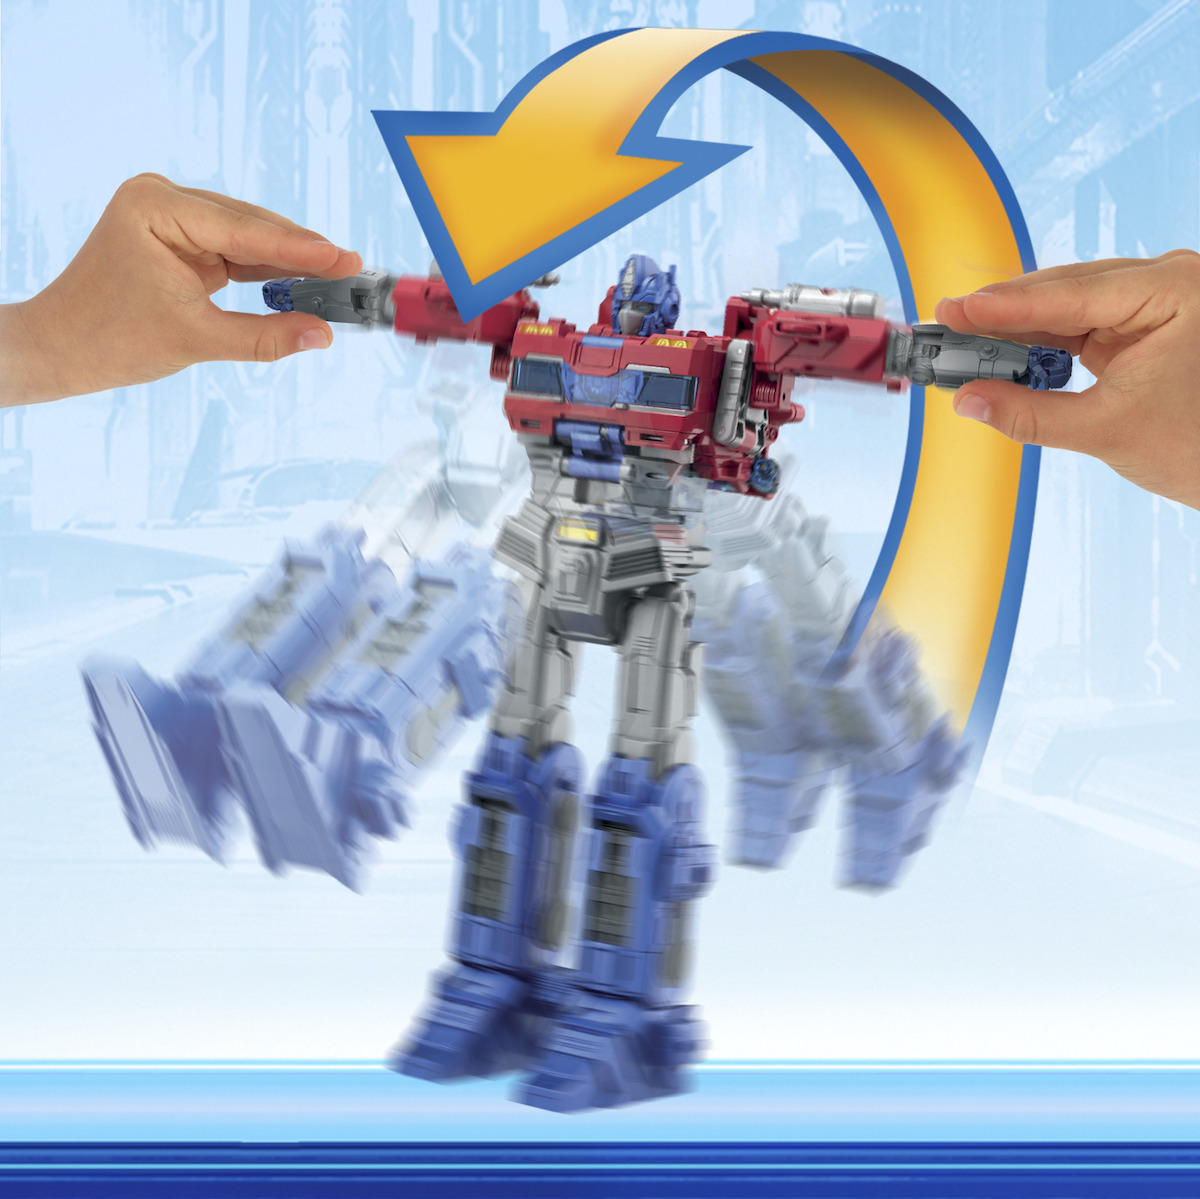 Transformers One - Power Flip Prime 5